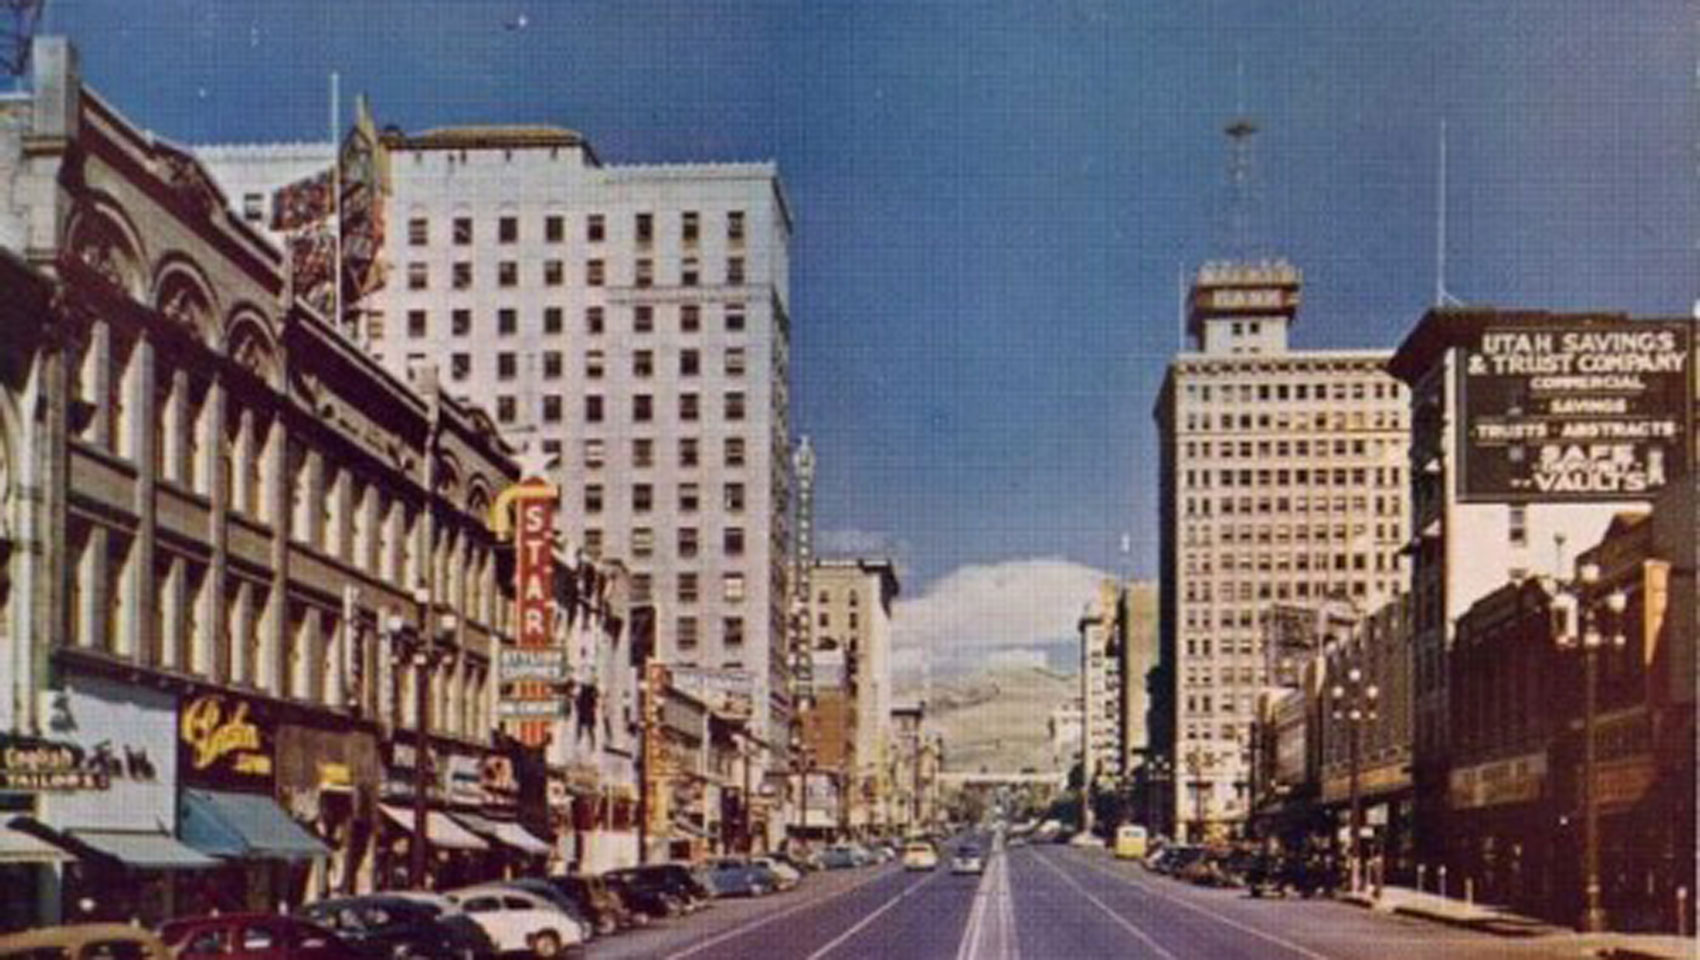 Historical Shot of Downtown Salt Lake City